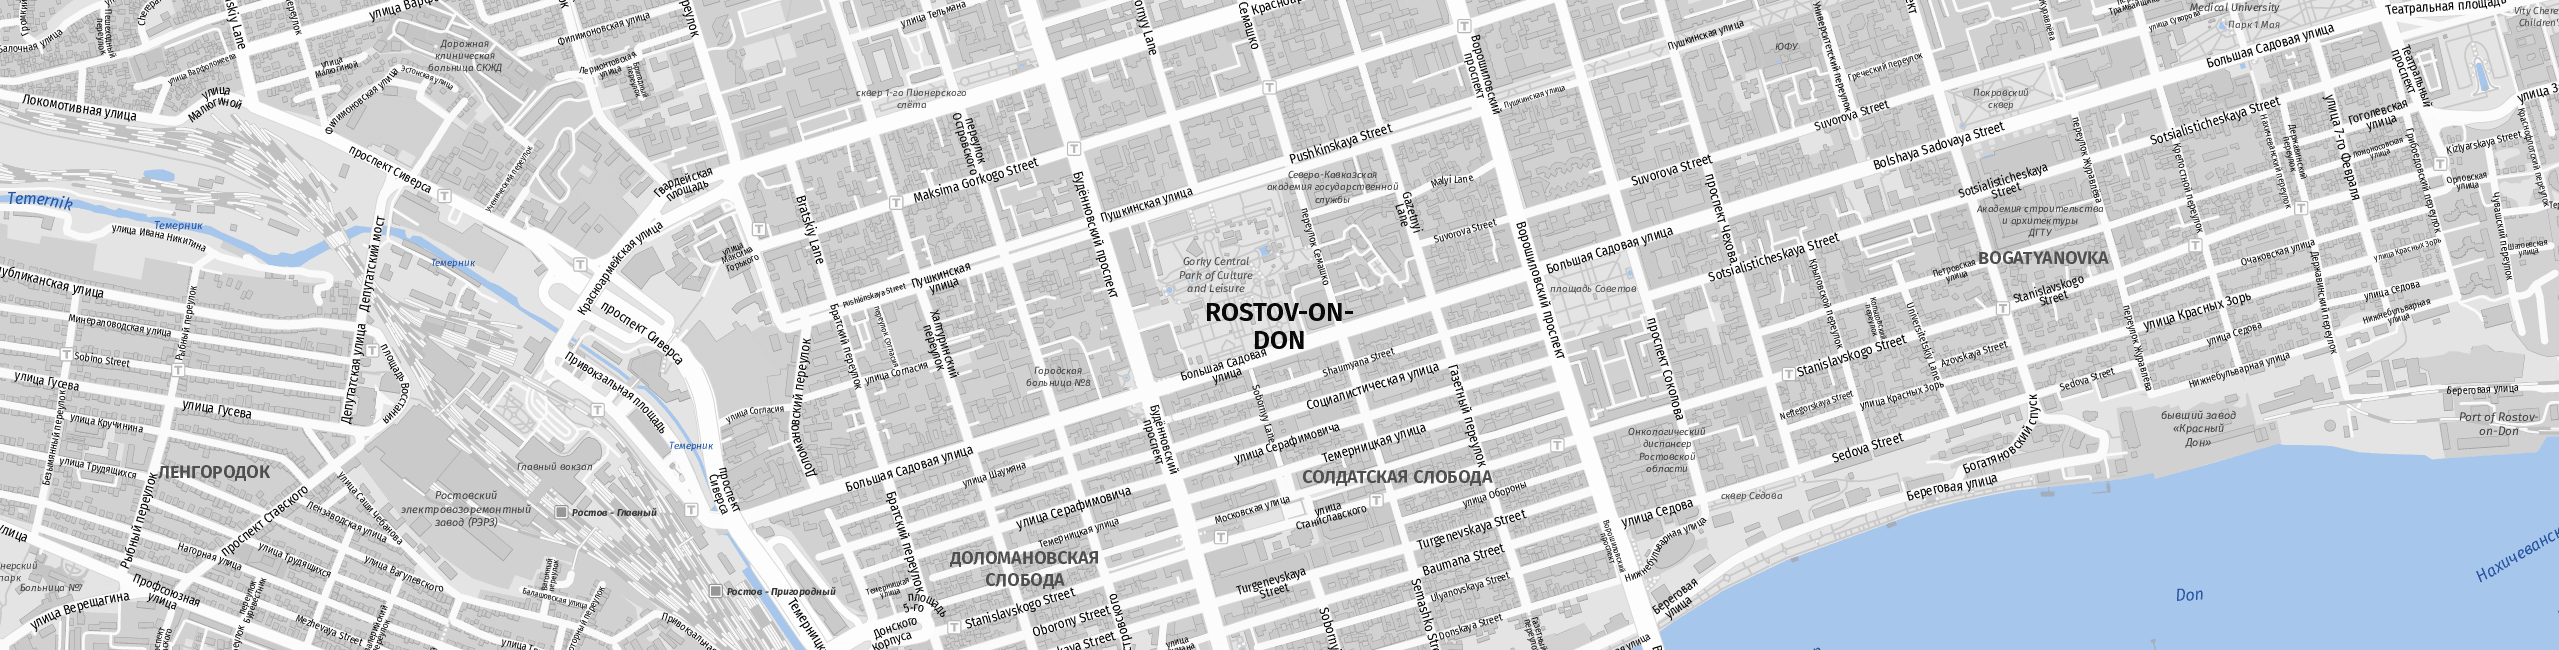 Stadtplan Rostow am Don zum Downloaden.